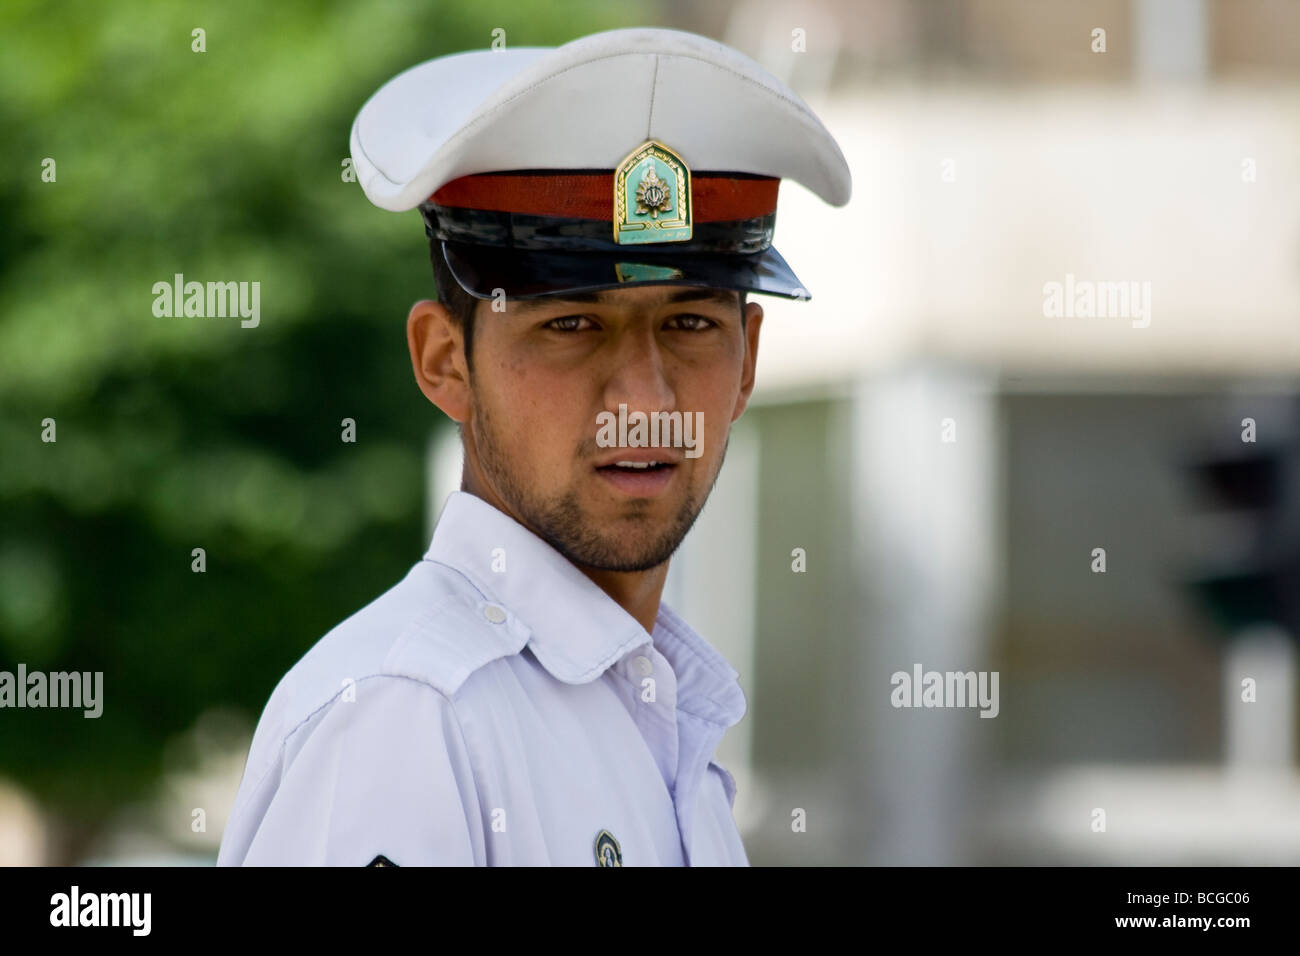 Iran iranian police policeman hi-res stock photography and images - Alamy